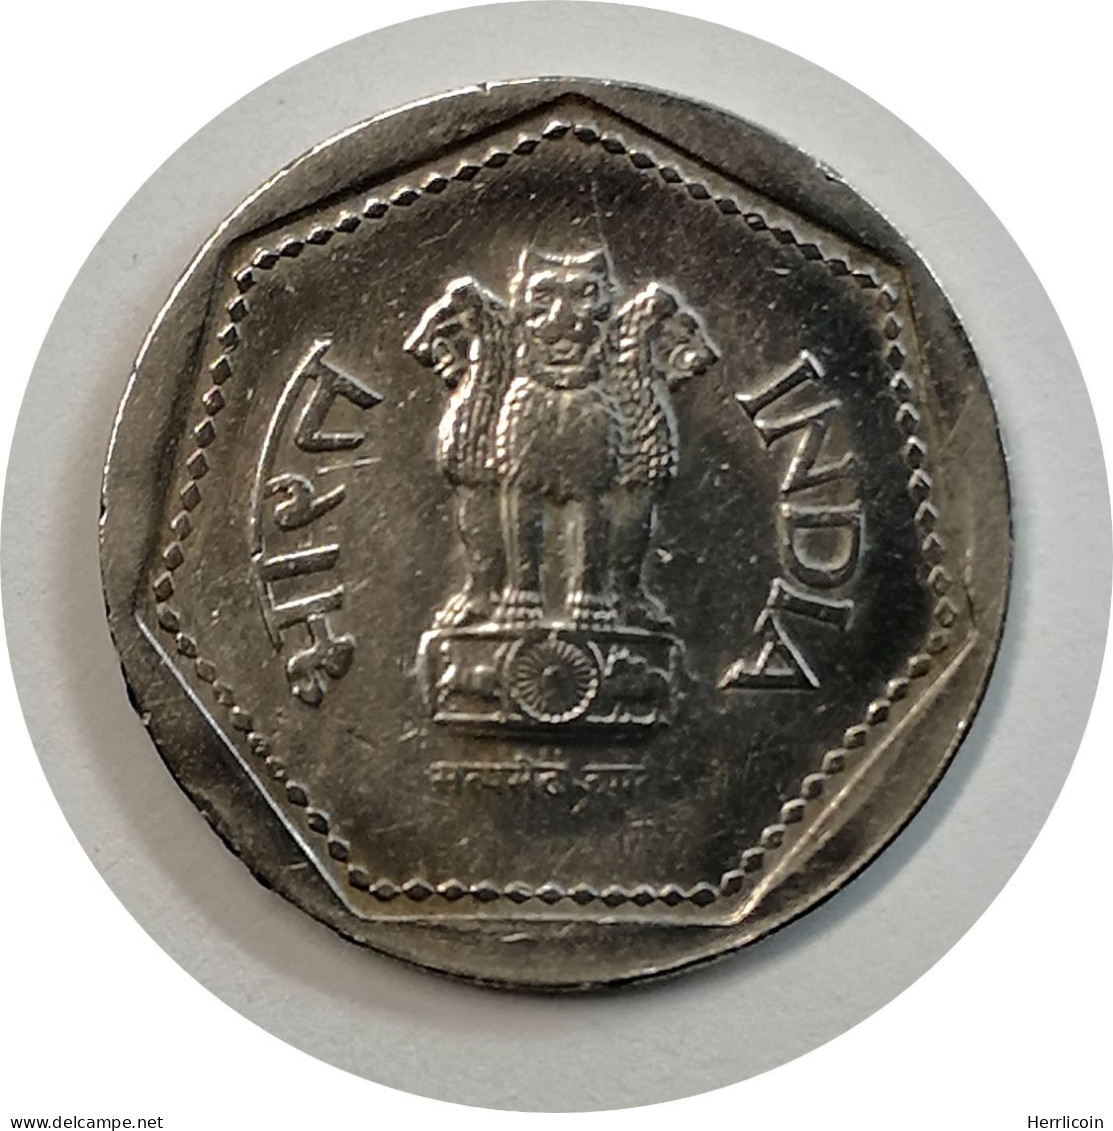 Monnaie Inde - 1983 - 1 Roupie Heptagone (Mumbai) - Inde